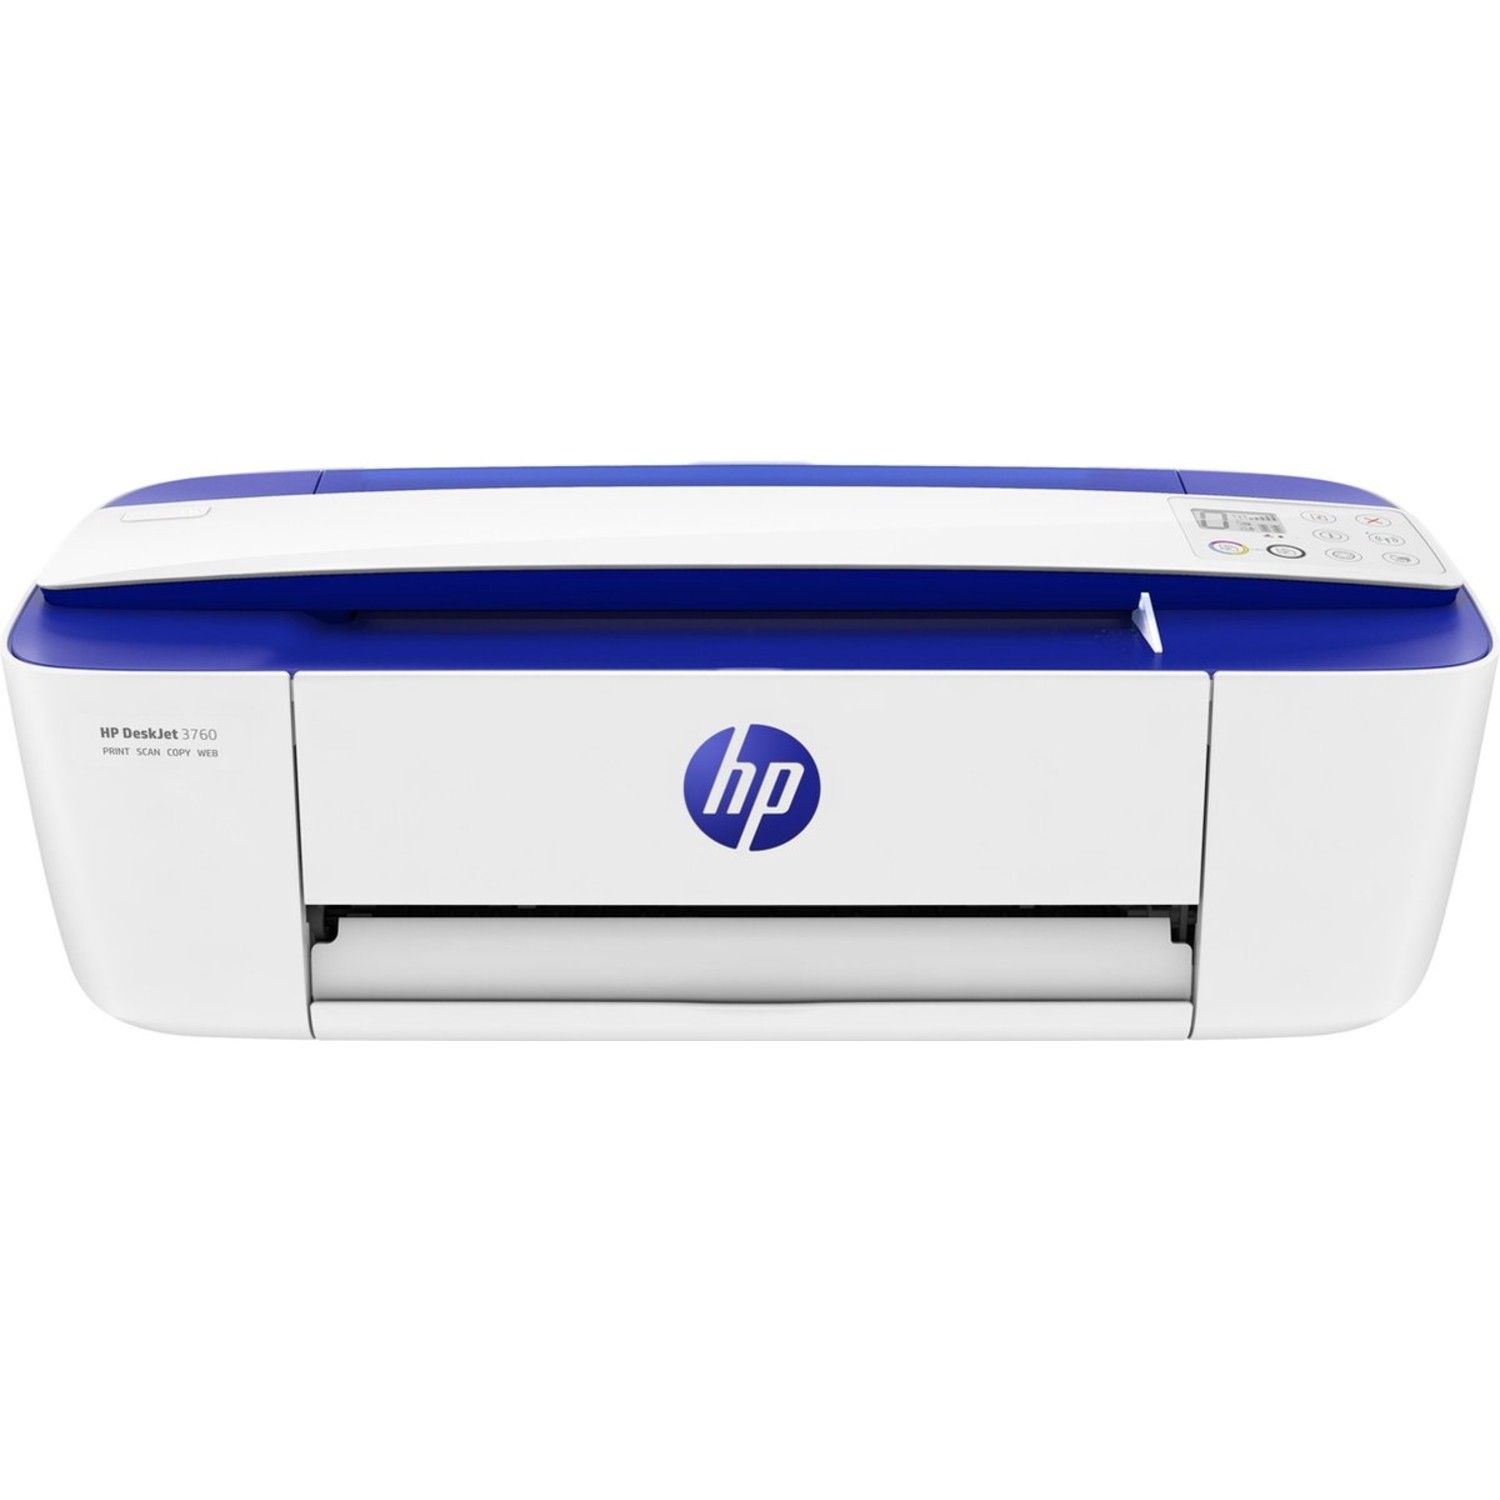 HP Deskjet 3760 All in one Printer -